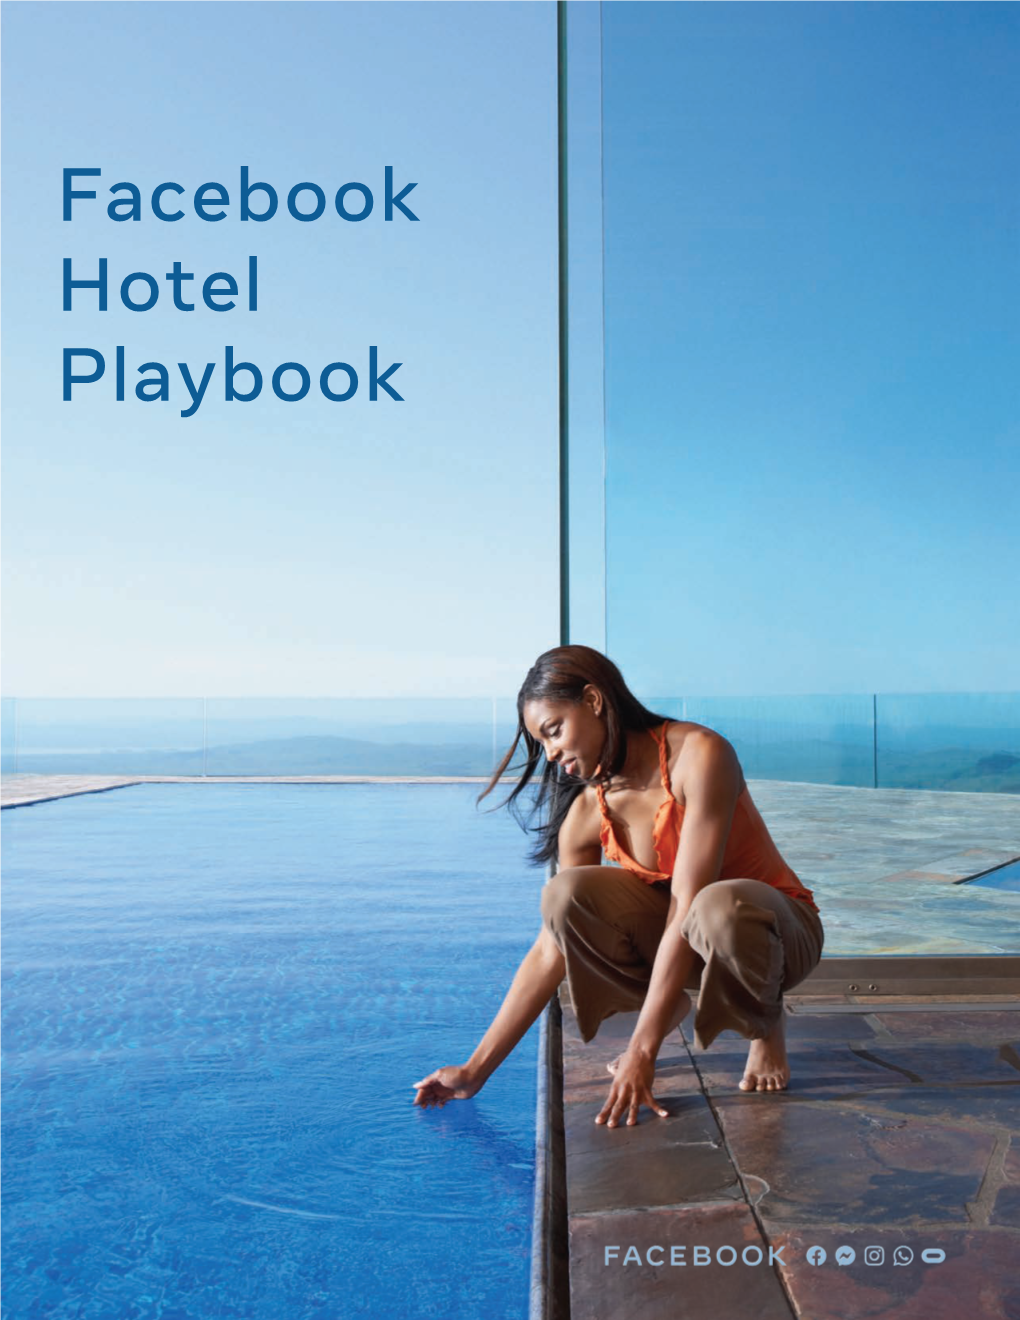 Facebook Hotel Playbook CONTENTS